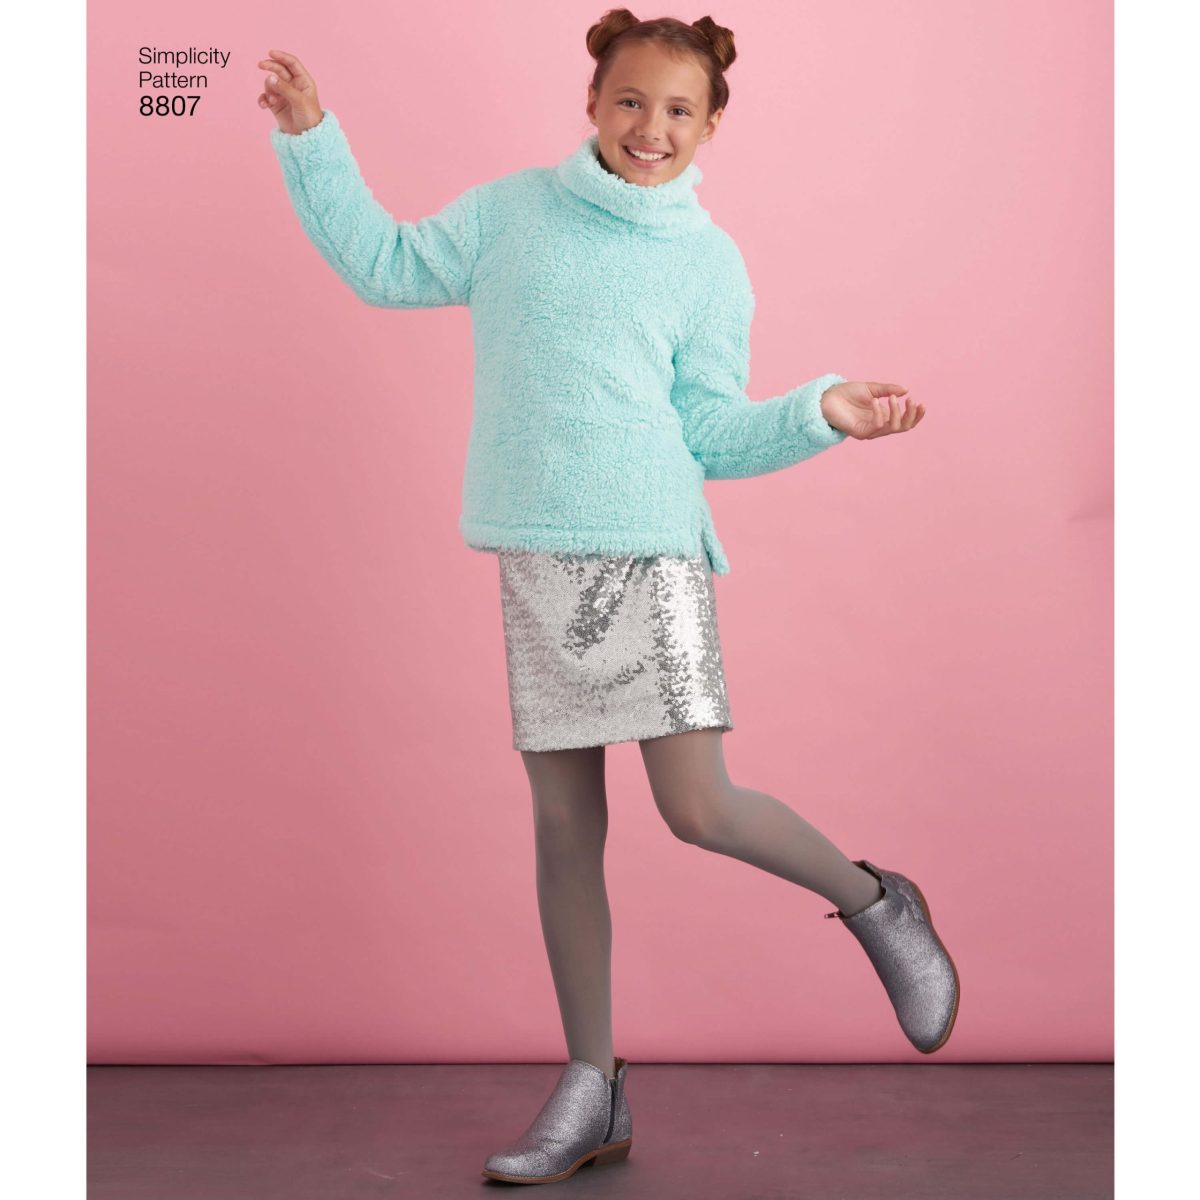 Simplicity Sewing Pattern 8807 Child and Girls' Sportswear